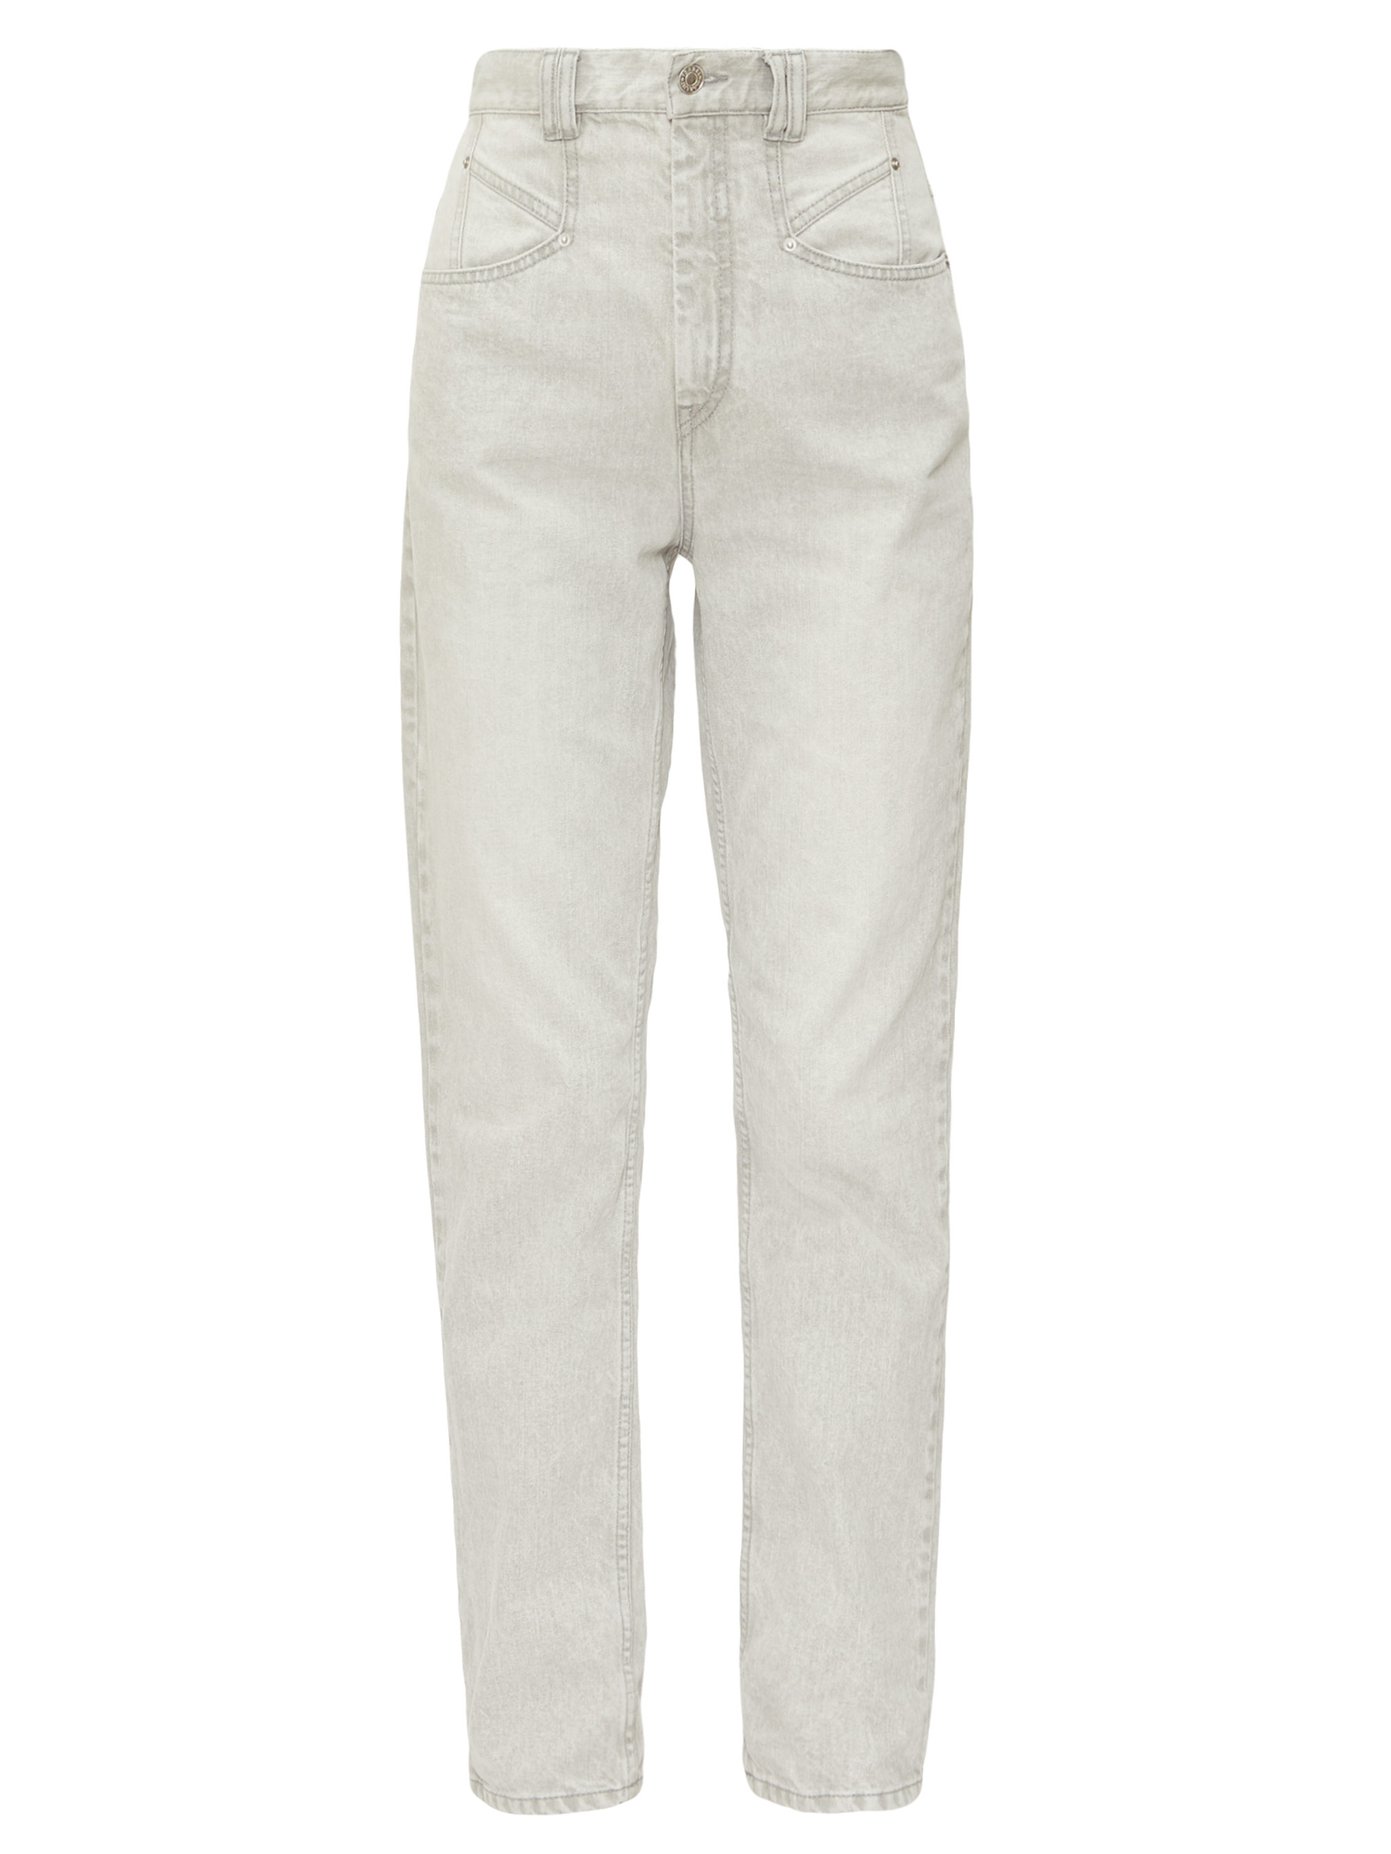 isabel marant white jeans